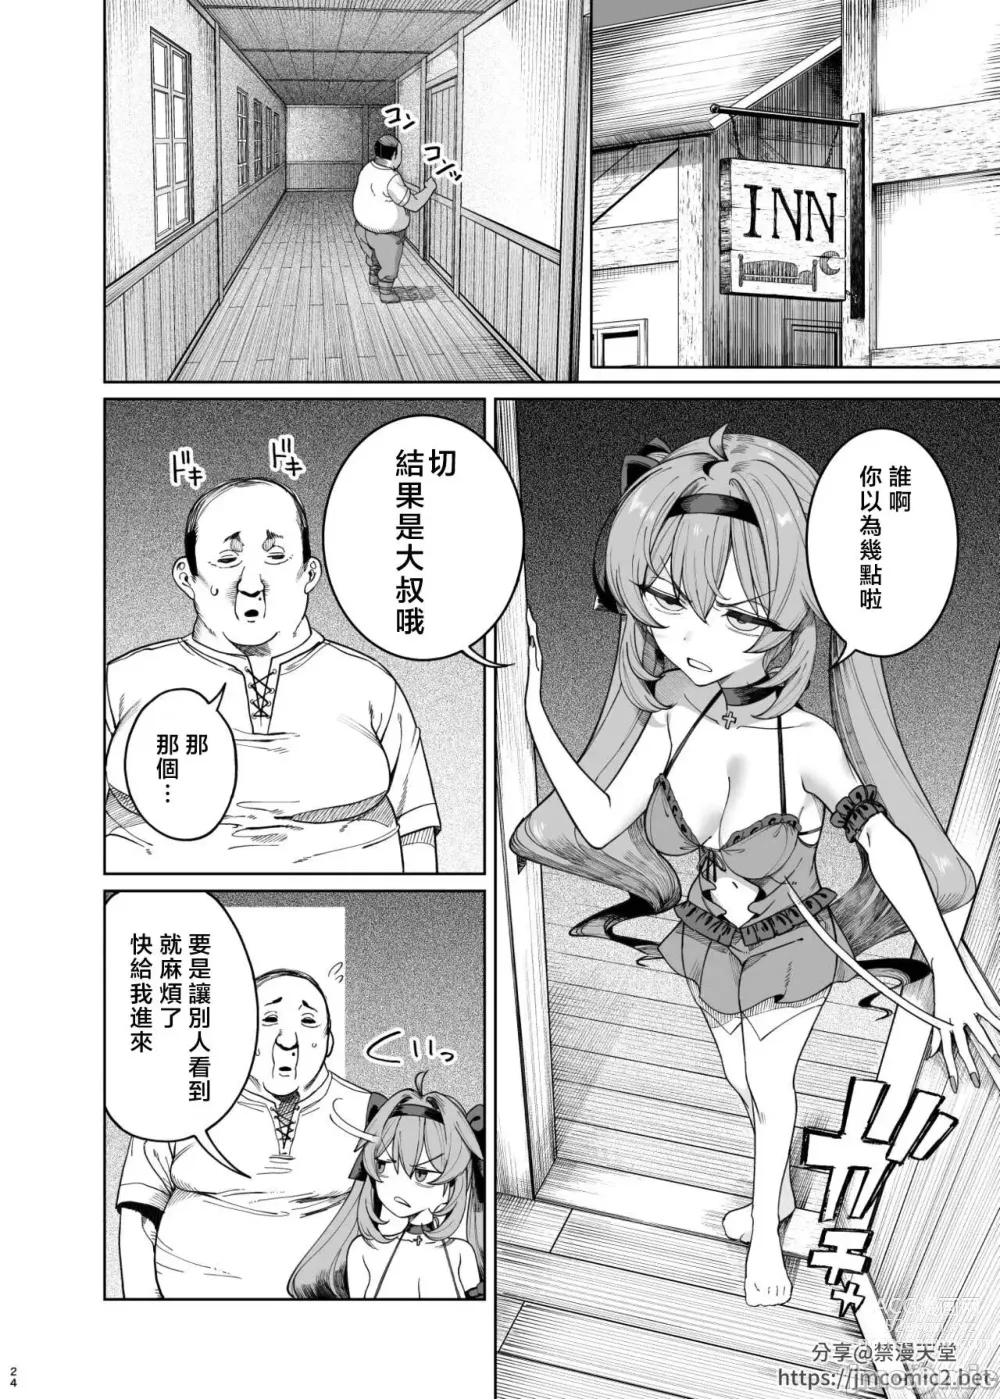 Page 23 of doujinshi 異世界わからせおじさん 勇者凌辱編